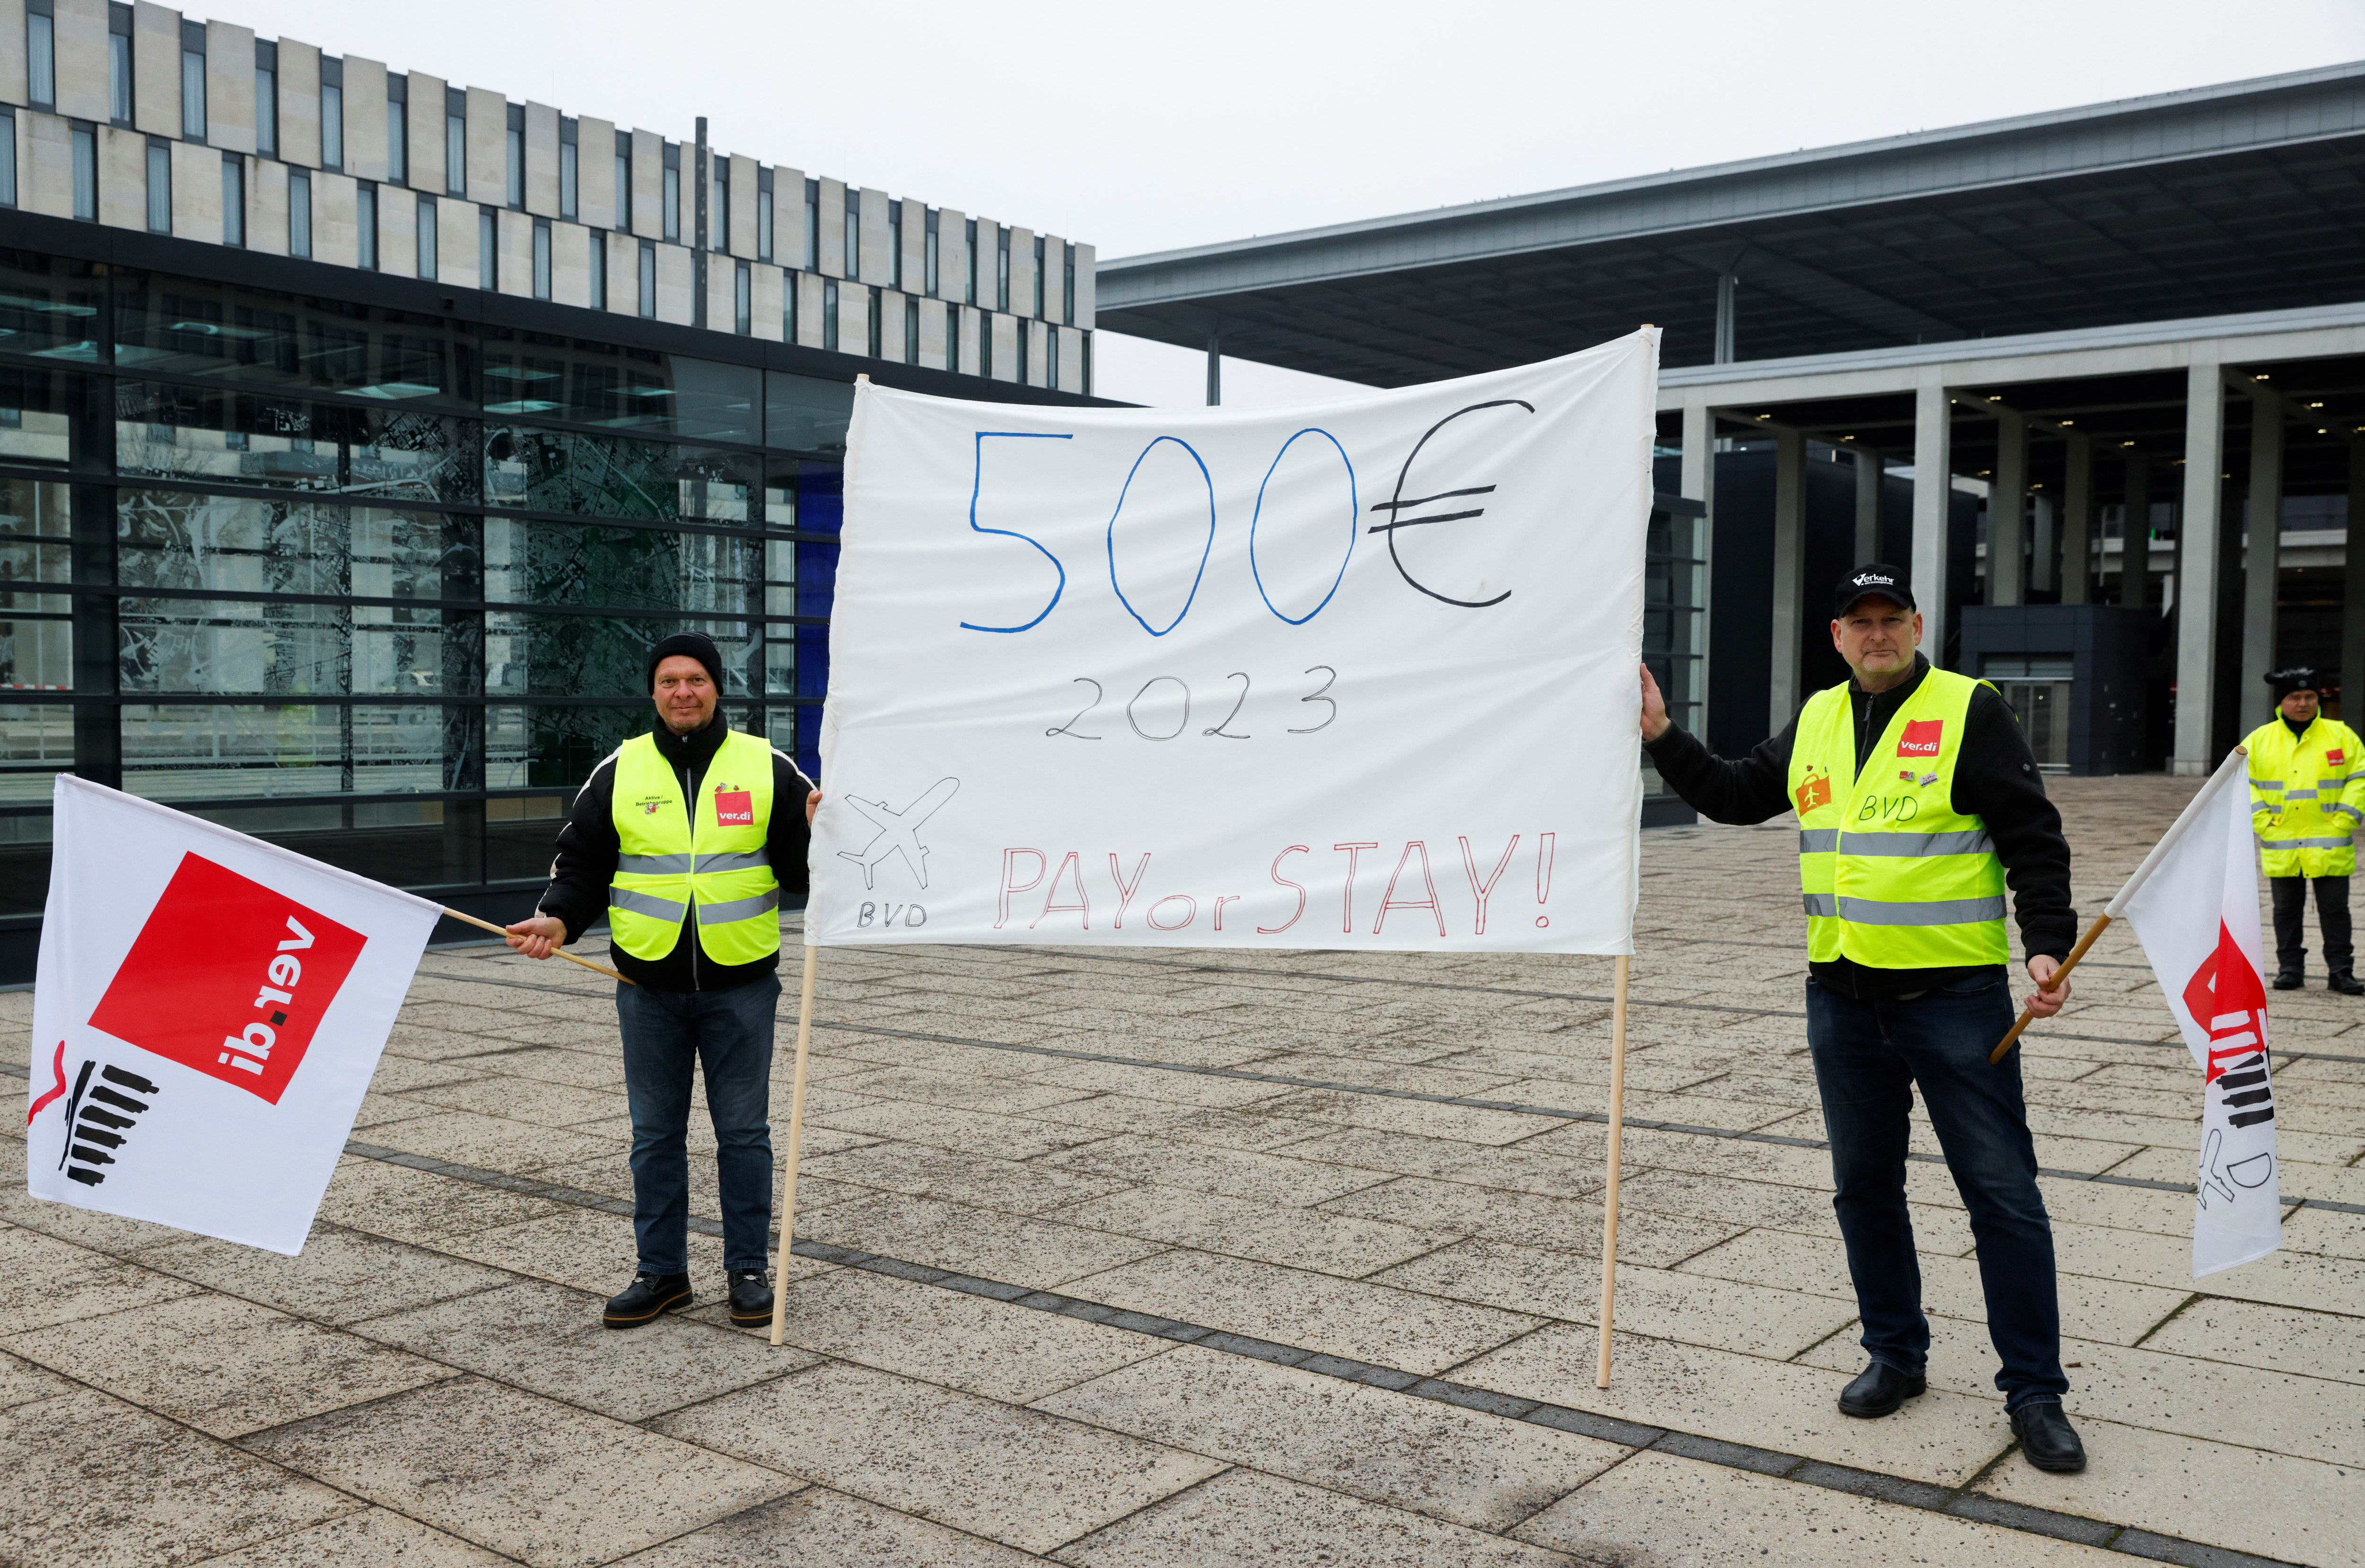 Employees strike over pay demands at the Berlin Brandenburg Airport (BER) in Berlin